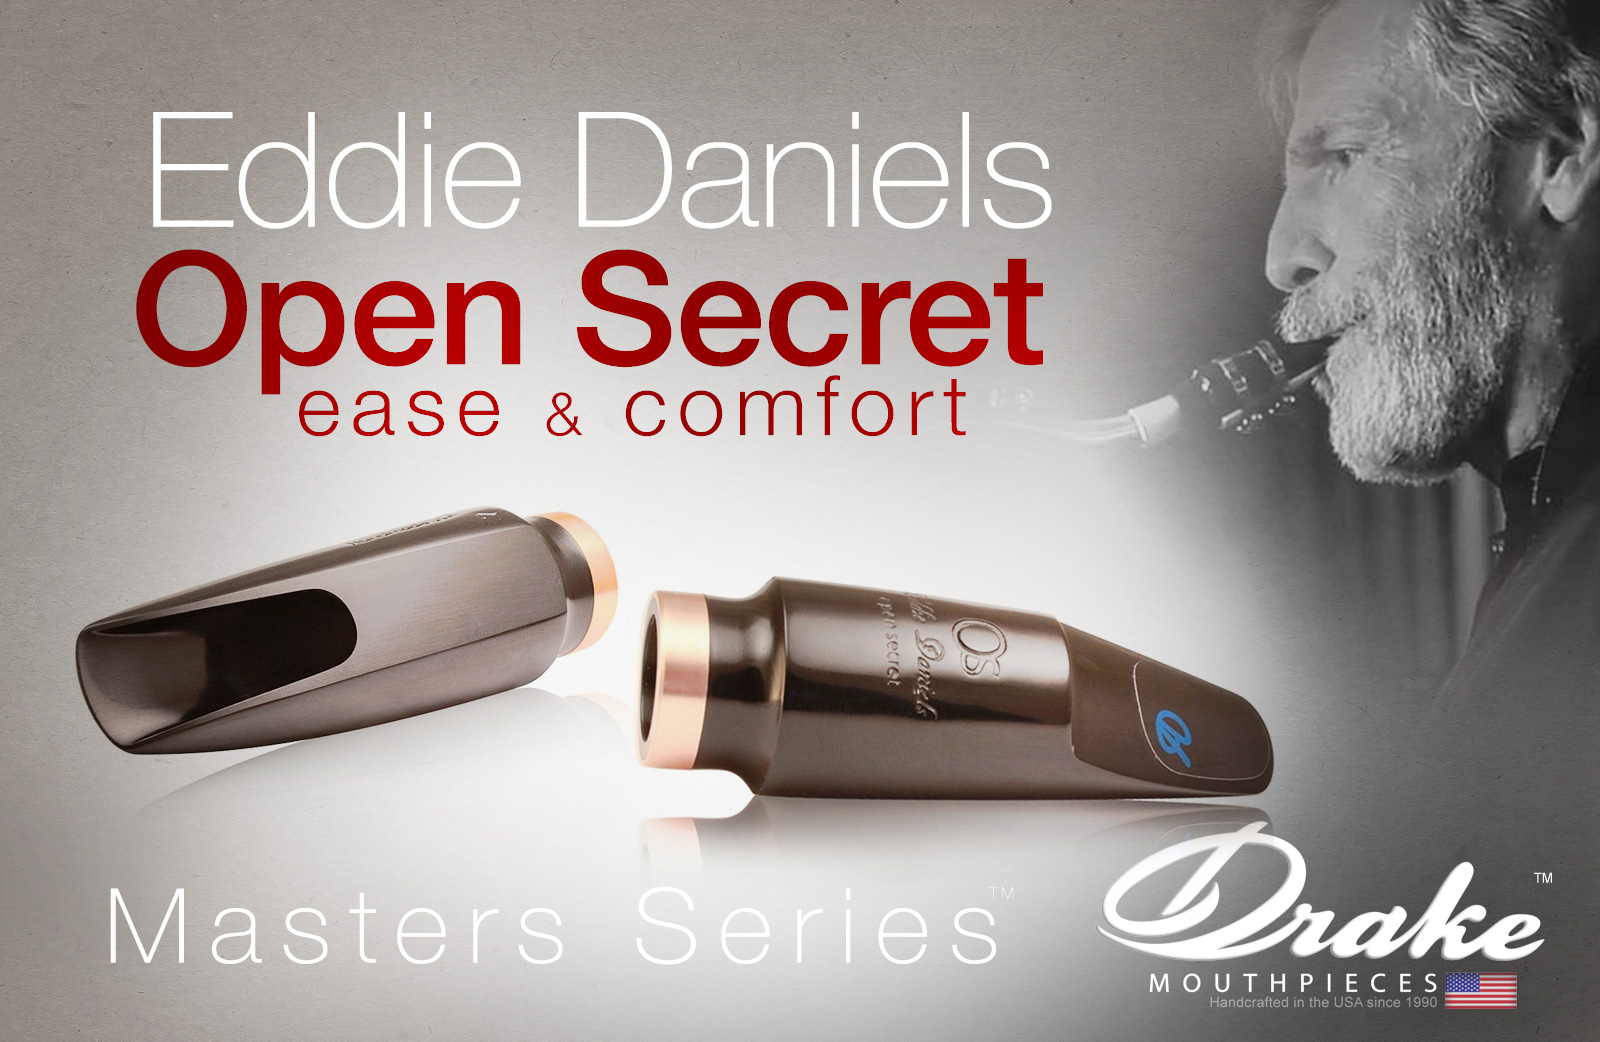 Eddie Daniels OS Masters Series Drake Mouthpiece blog layout